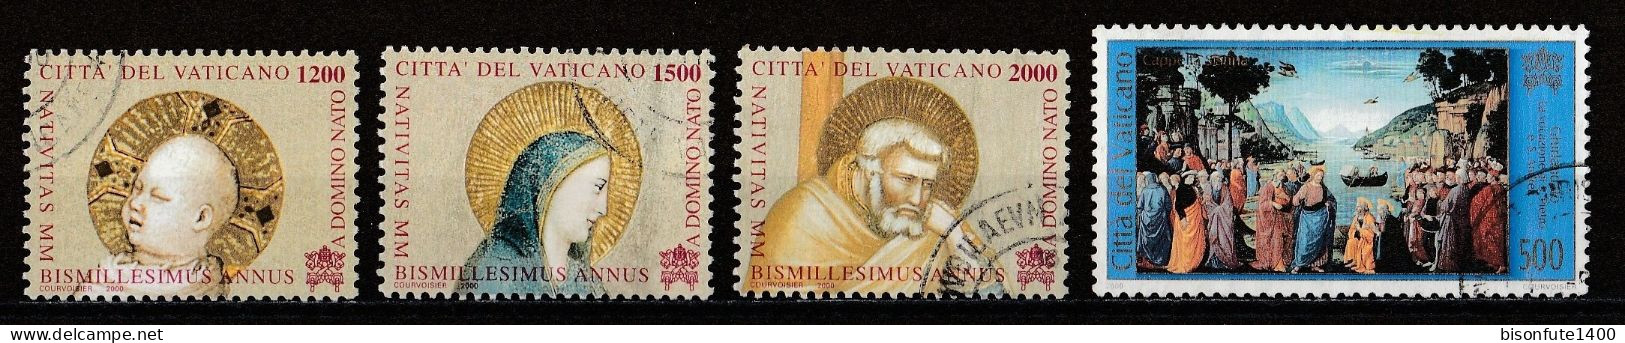 Vatican 2000 : Timbres Yvert & Tellier N° 1183 - 1196 - 1199 - 1201 - 1209 - 1210 - 1211 - 1212 Et 1216 Oblitérés - Usados